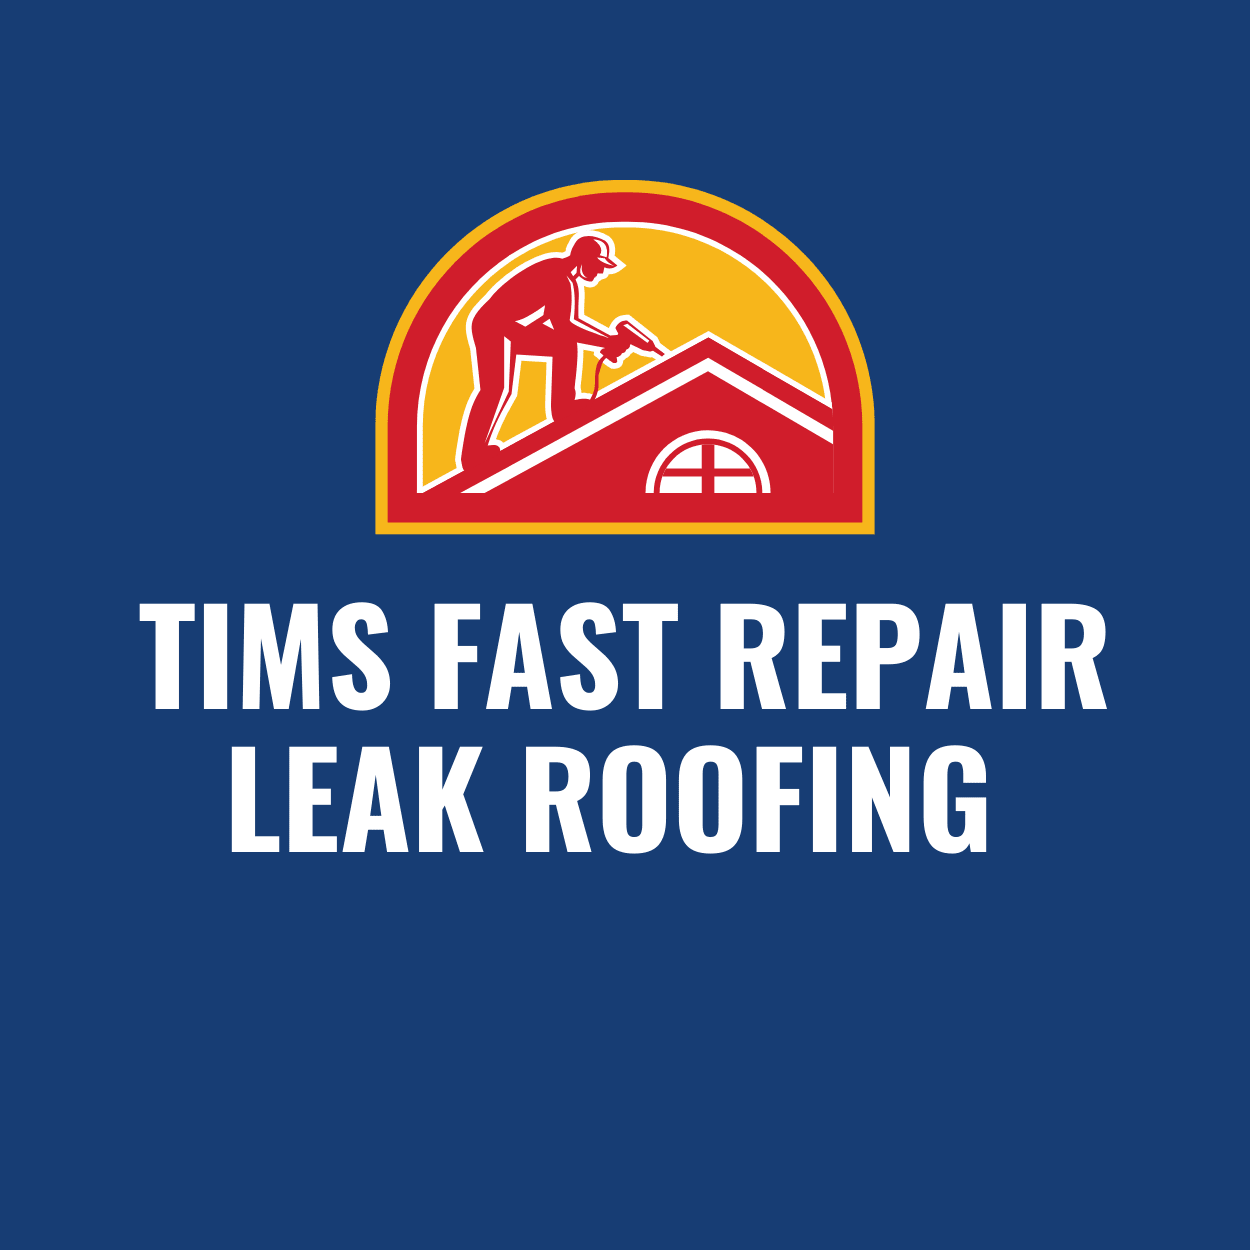 Tim's Fast Repair Leak Roofing